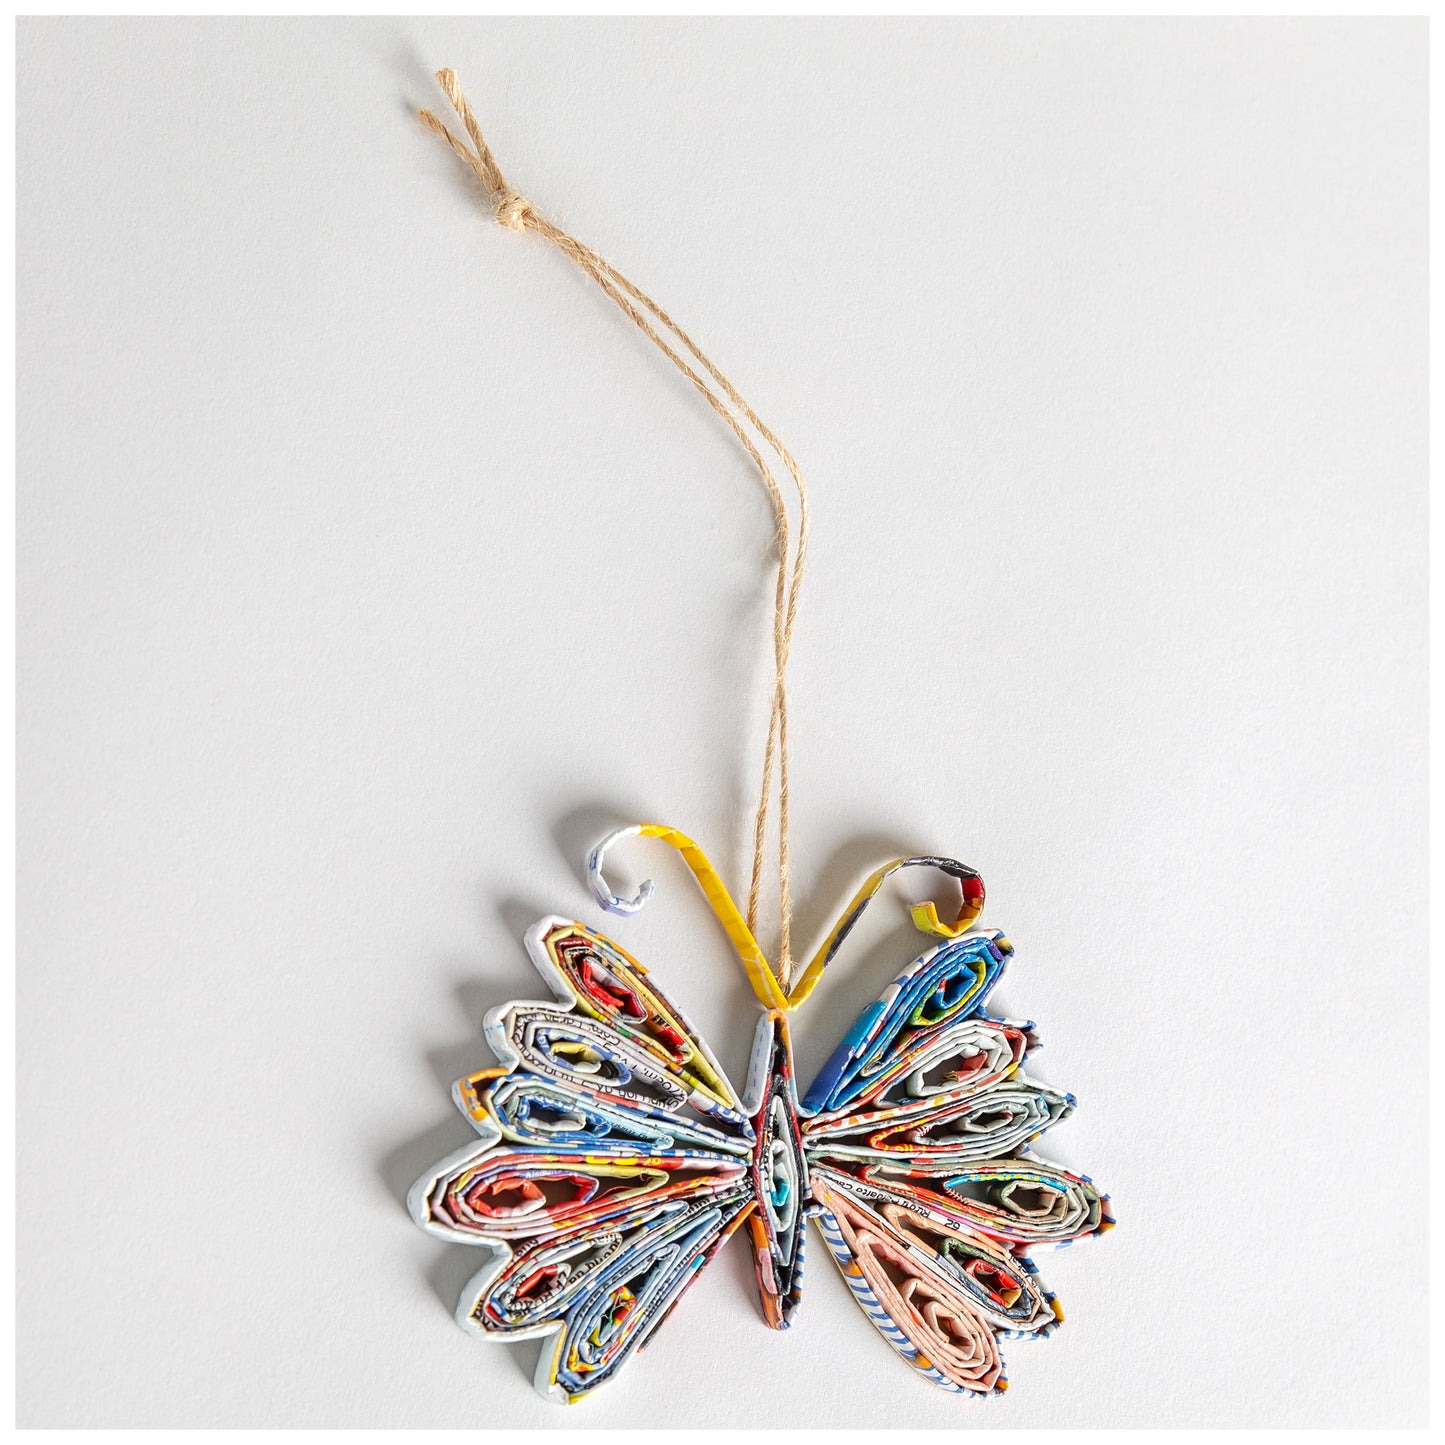 Recycled Magazine Ornament | Handmade, Fair Trade